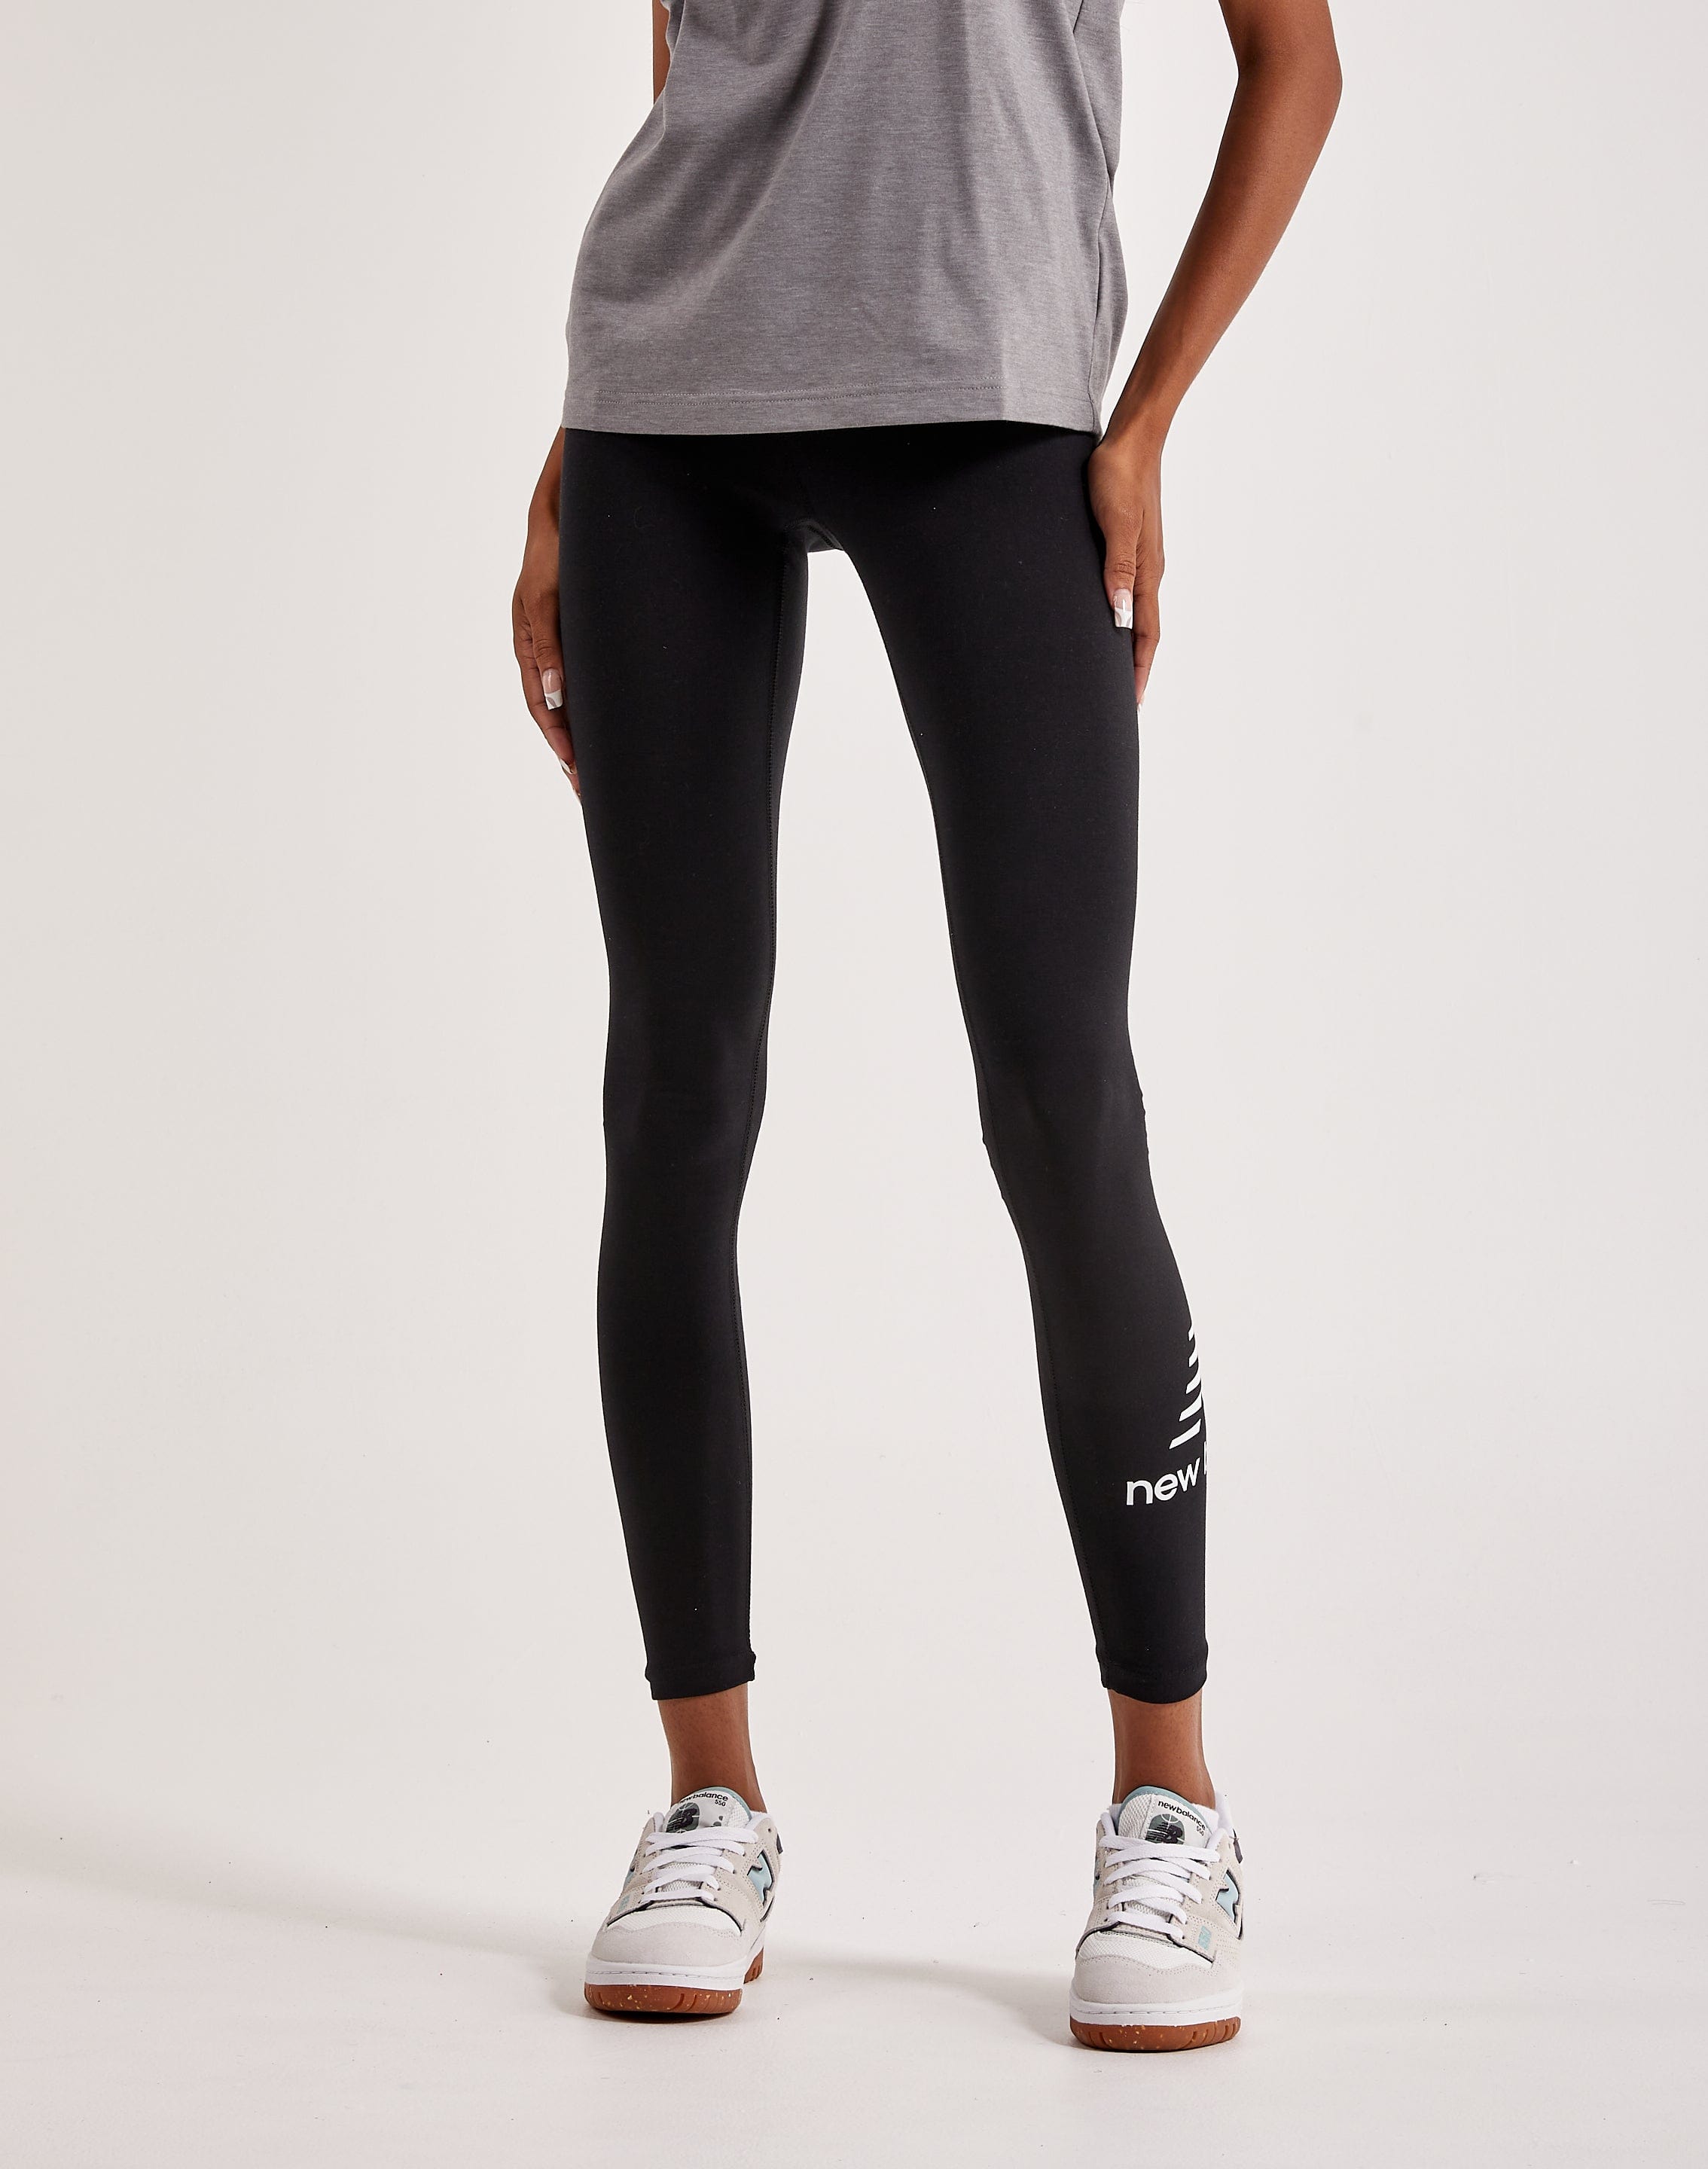 NB New Balance Capri Leggings Womens Large Yoga Pants Lightning Dry Black